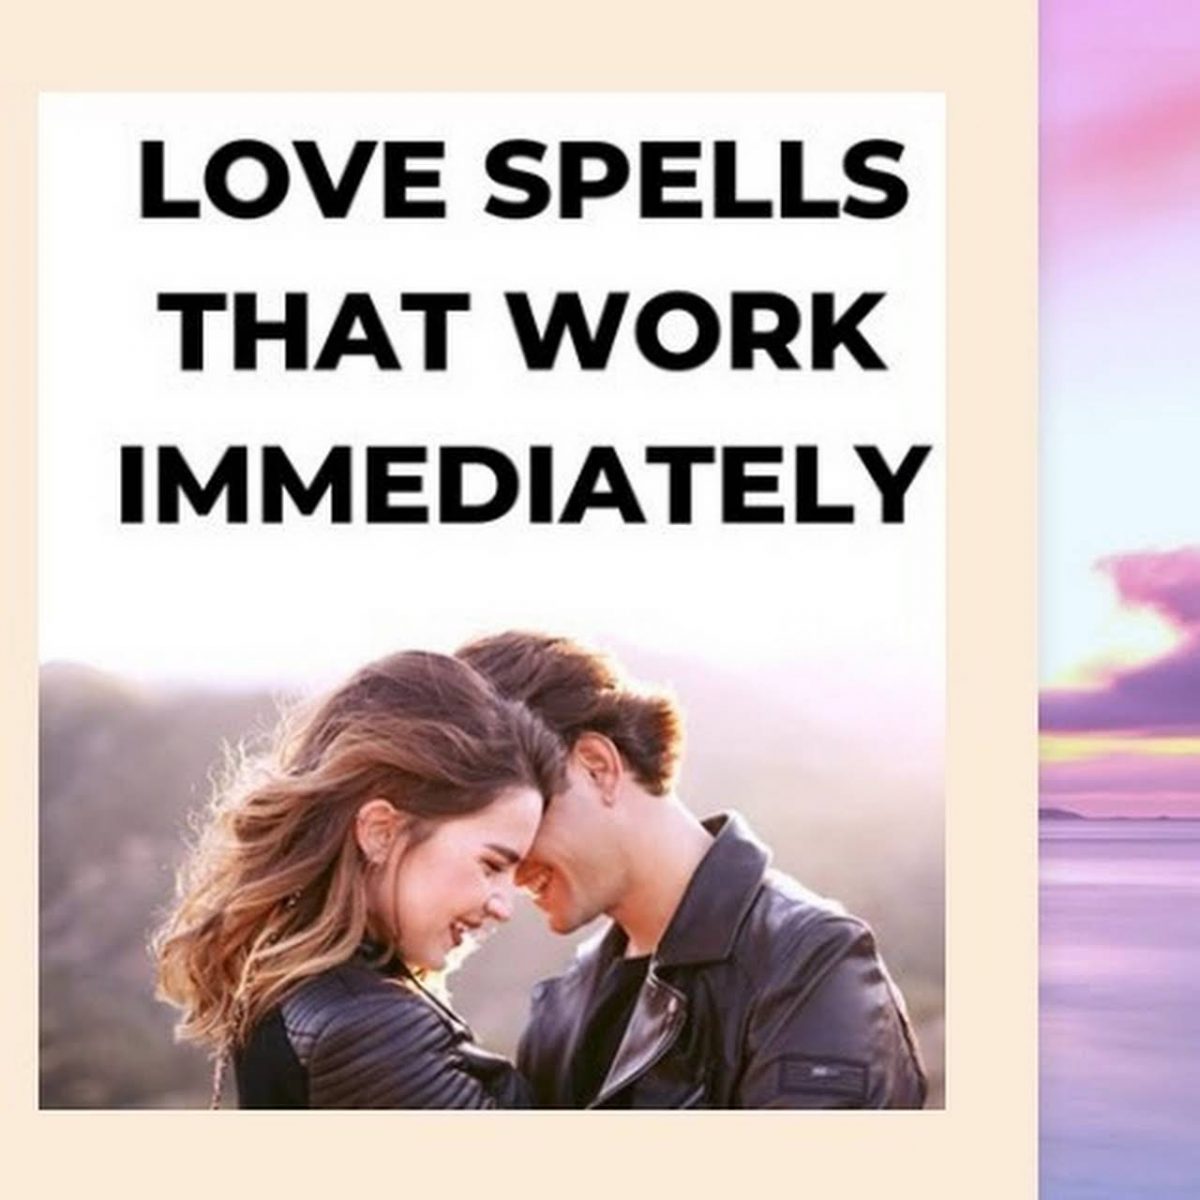 Love spells that work